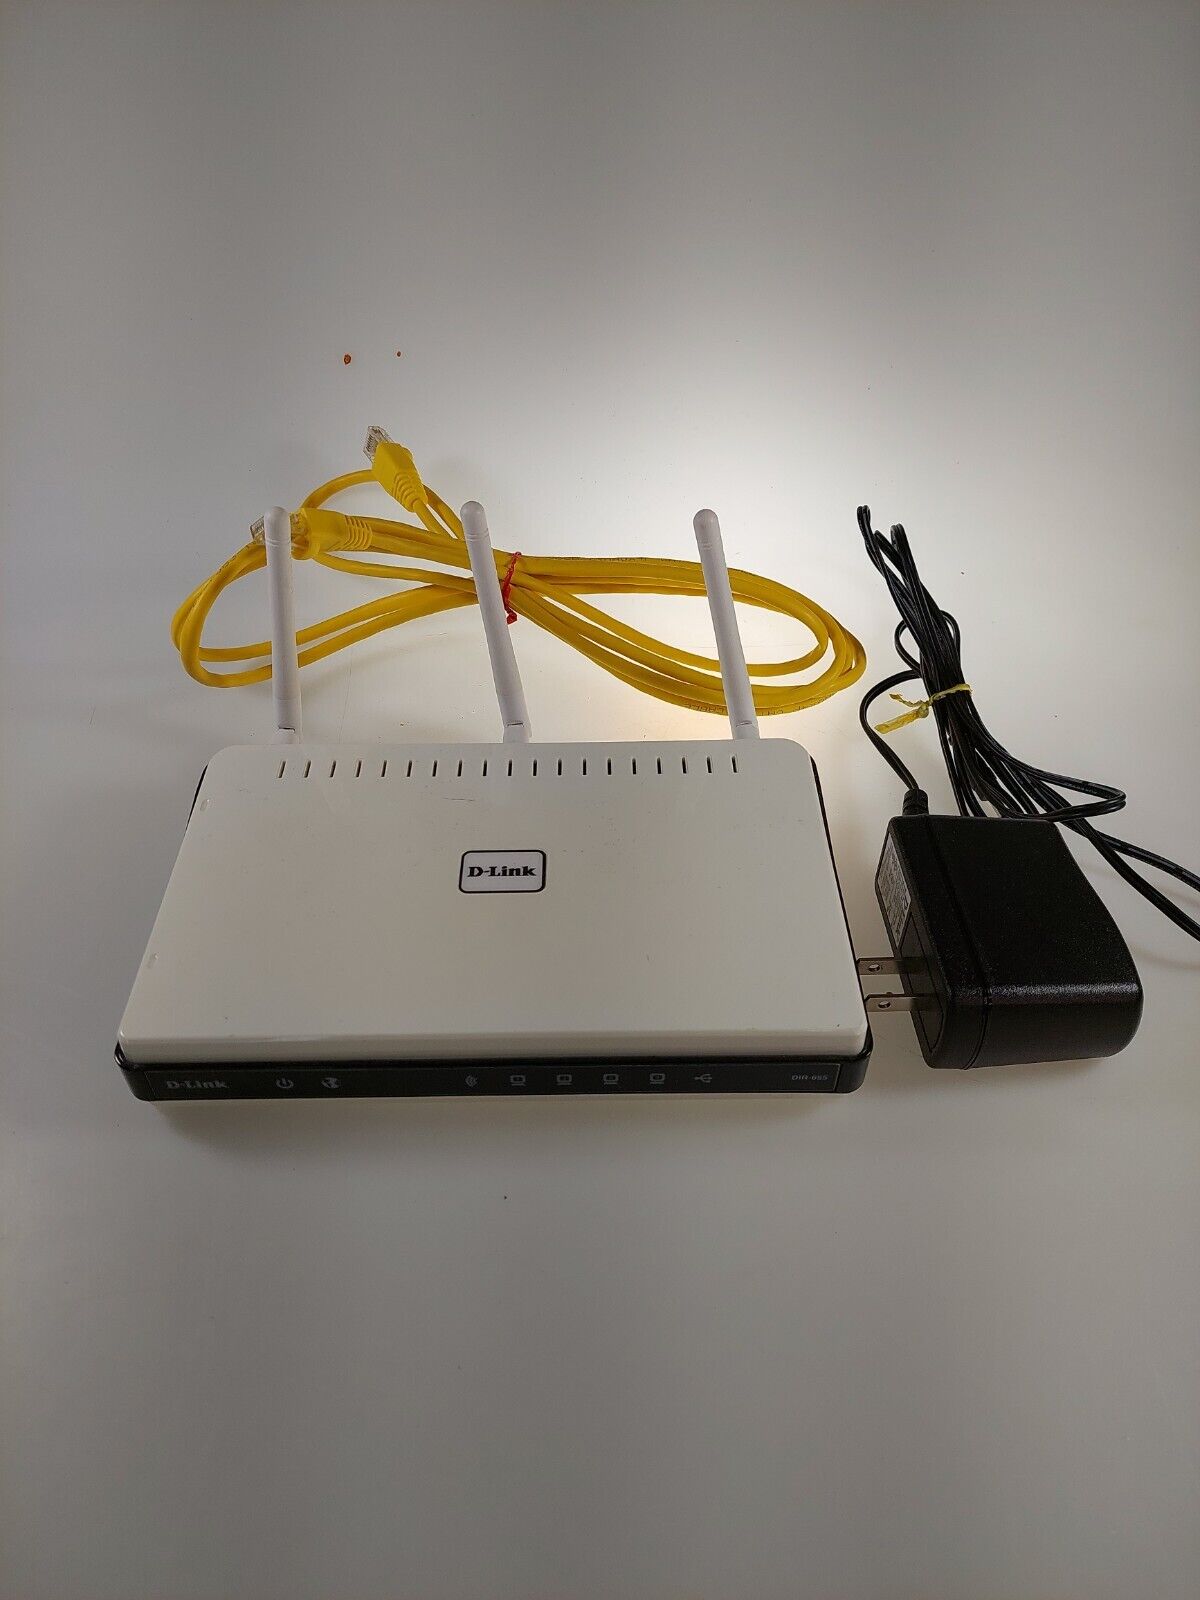 D-Link DIR-655 300 Mbps 4-Port Gigabit Wireless N Router w/ Adapter